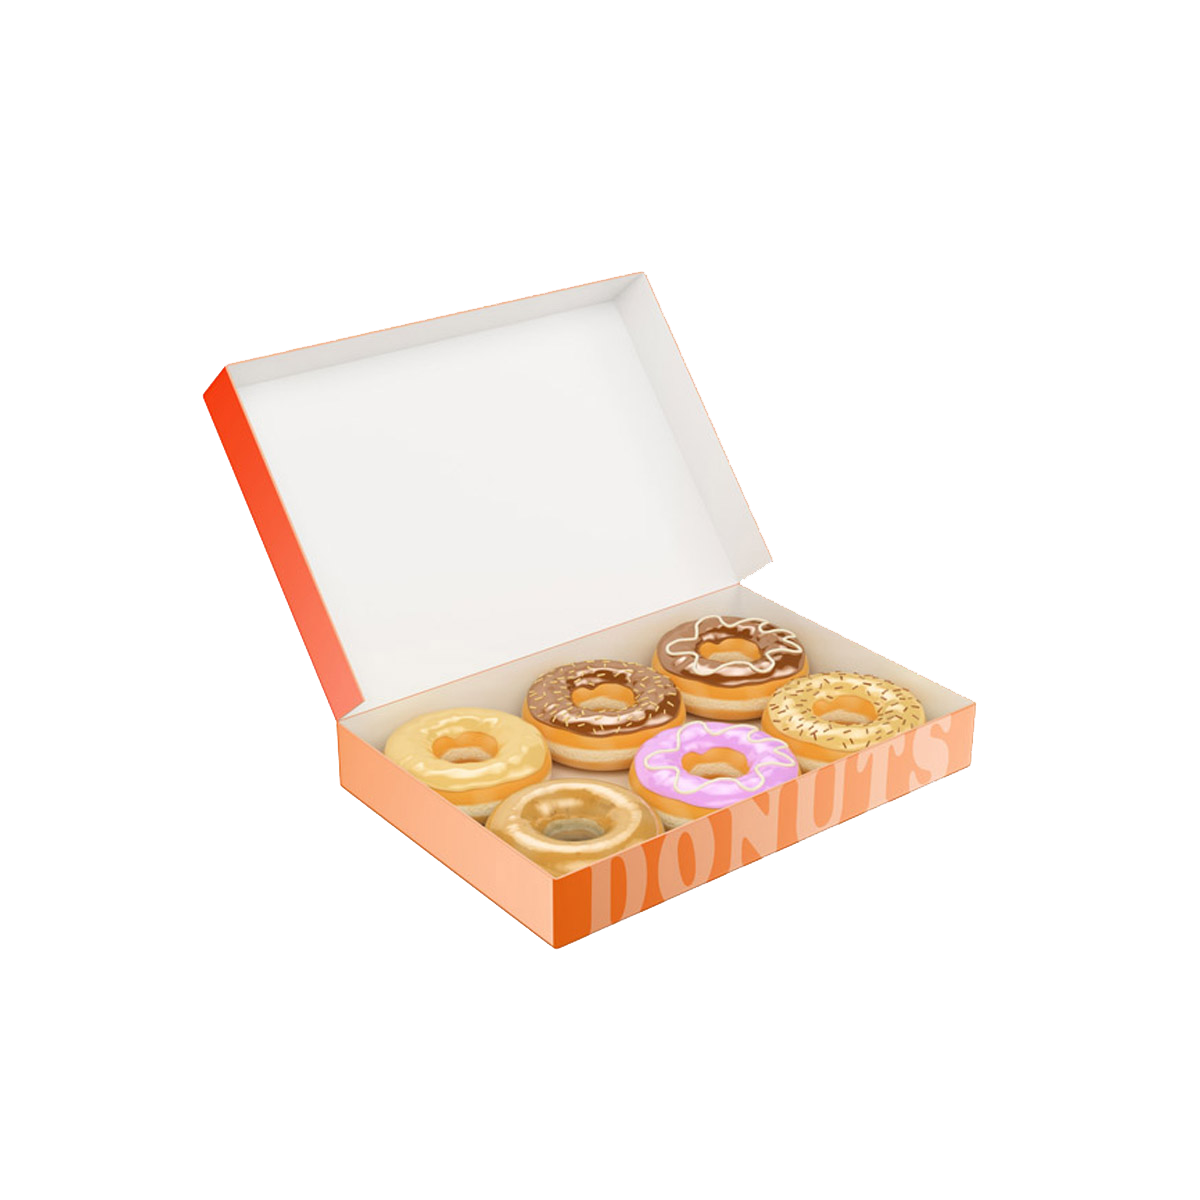 https://dodopackaging.com/wp-content/uploads/2019/02/Custom-Printed-Donut-Boxes.png